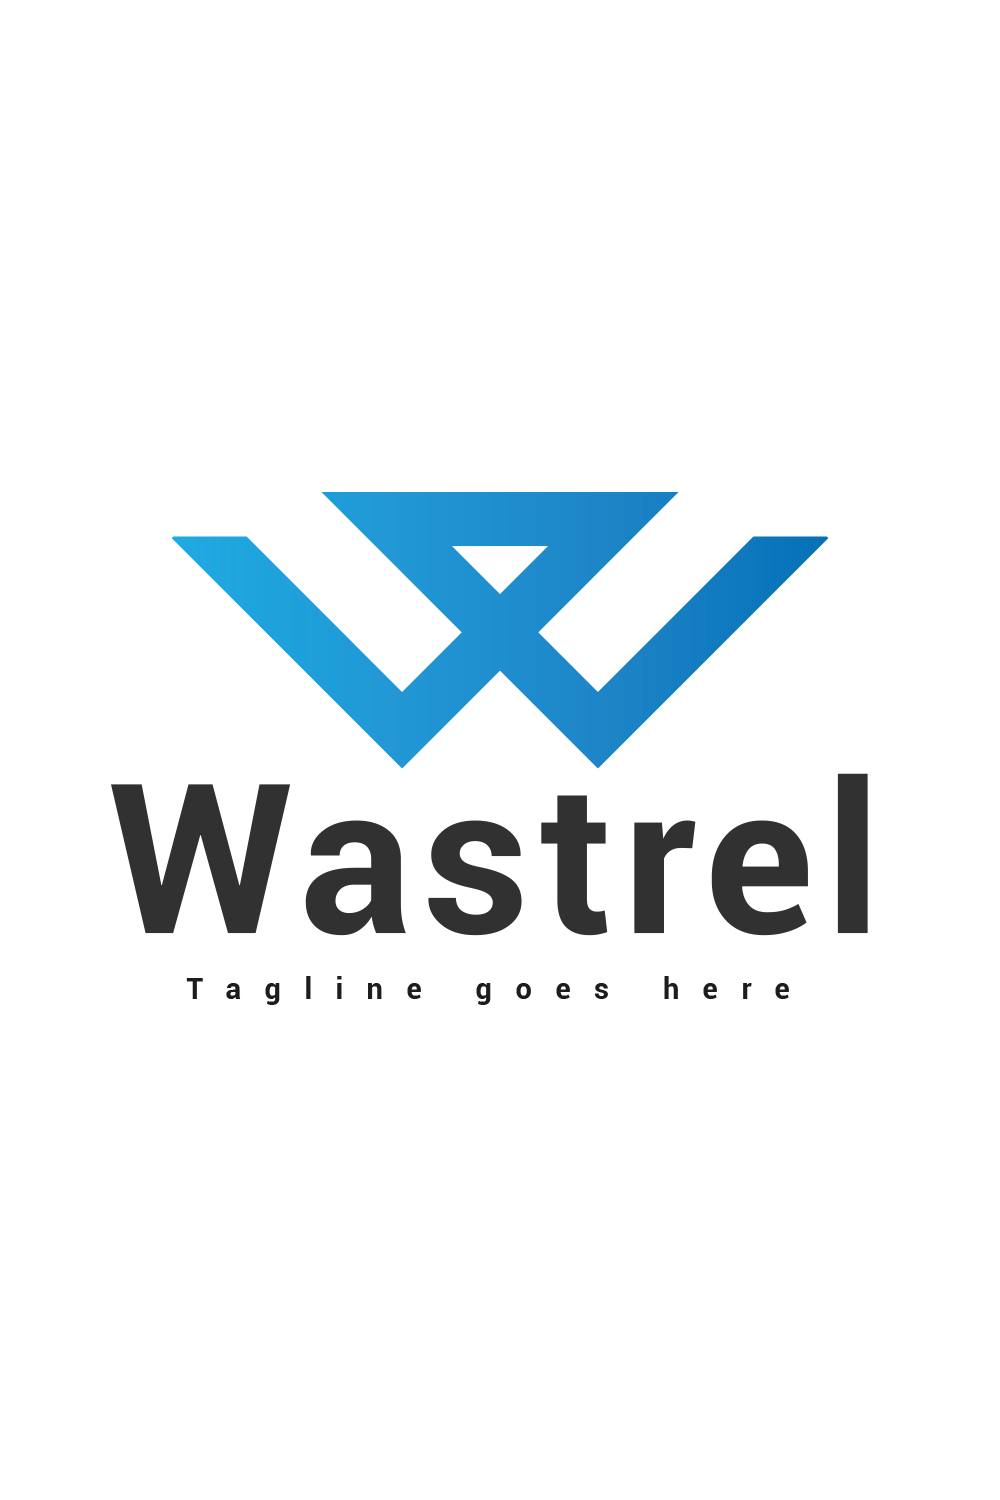 Wastren ( Letter W ) logo design pinterest preview image.